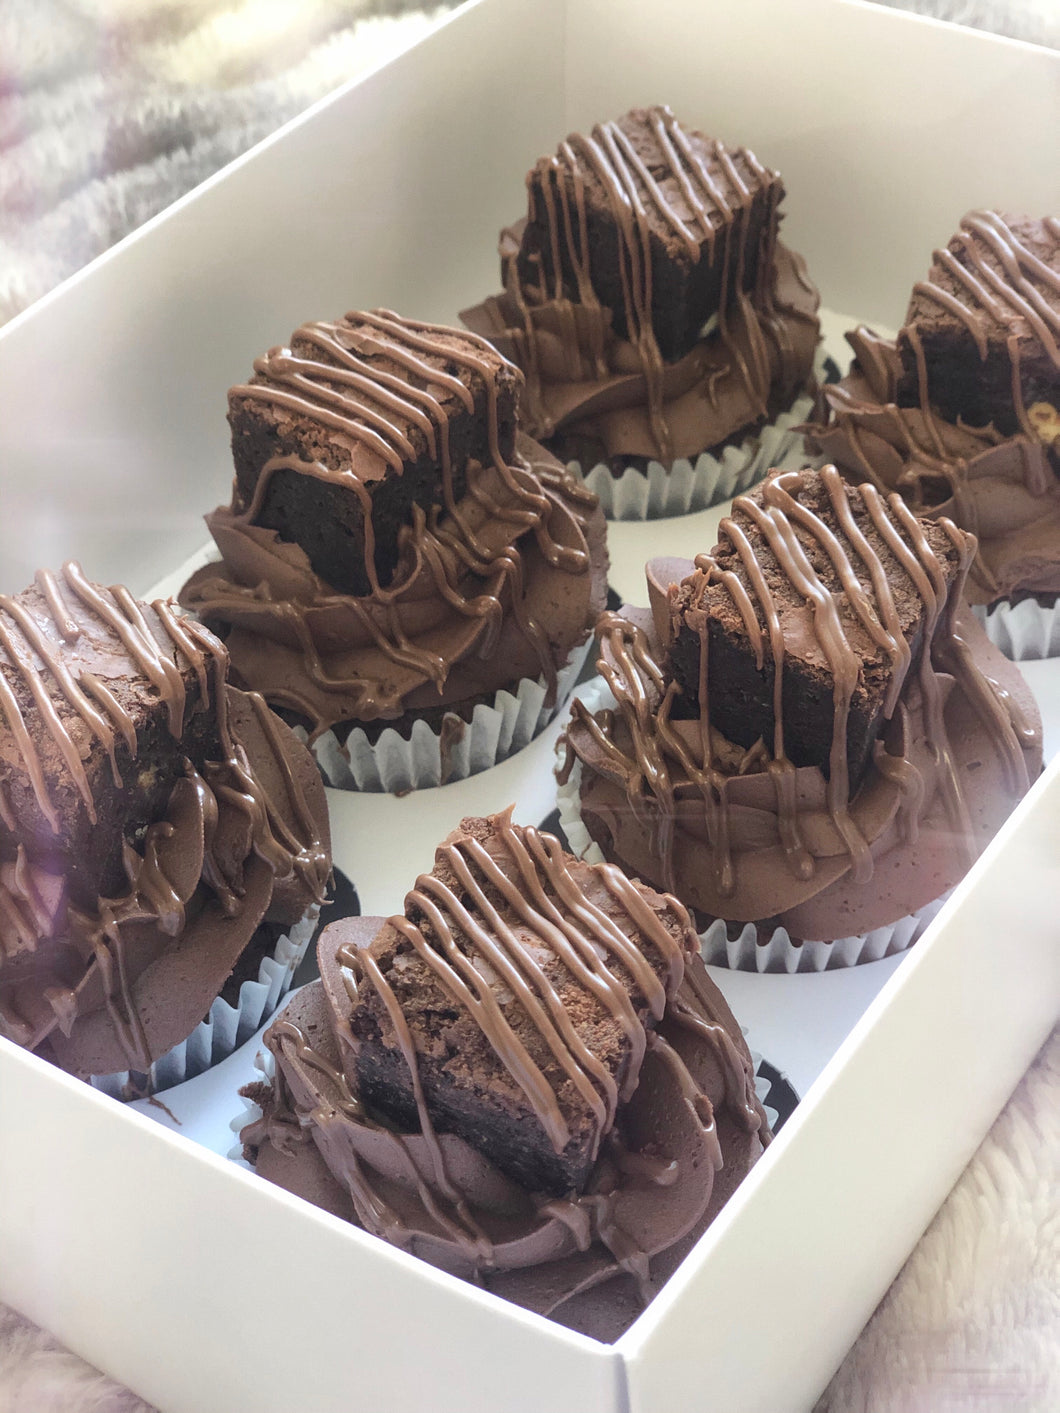 Chocolate brownie cupcakes